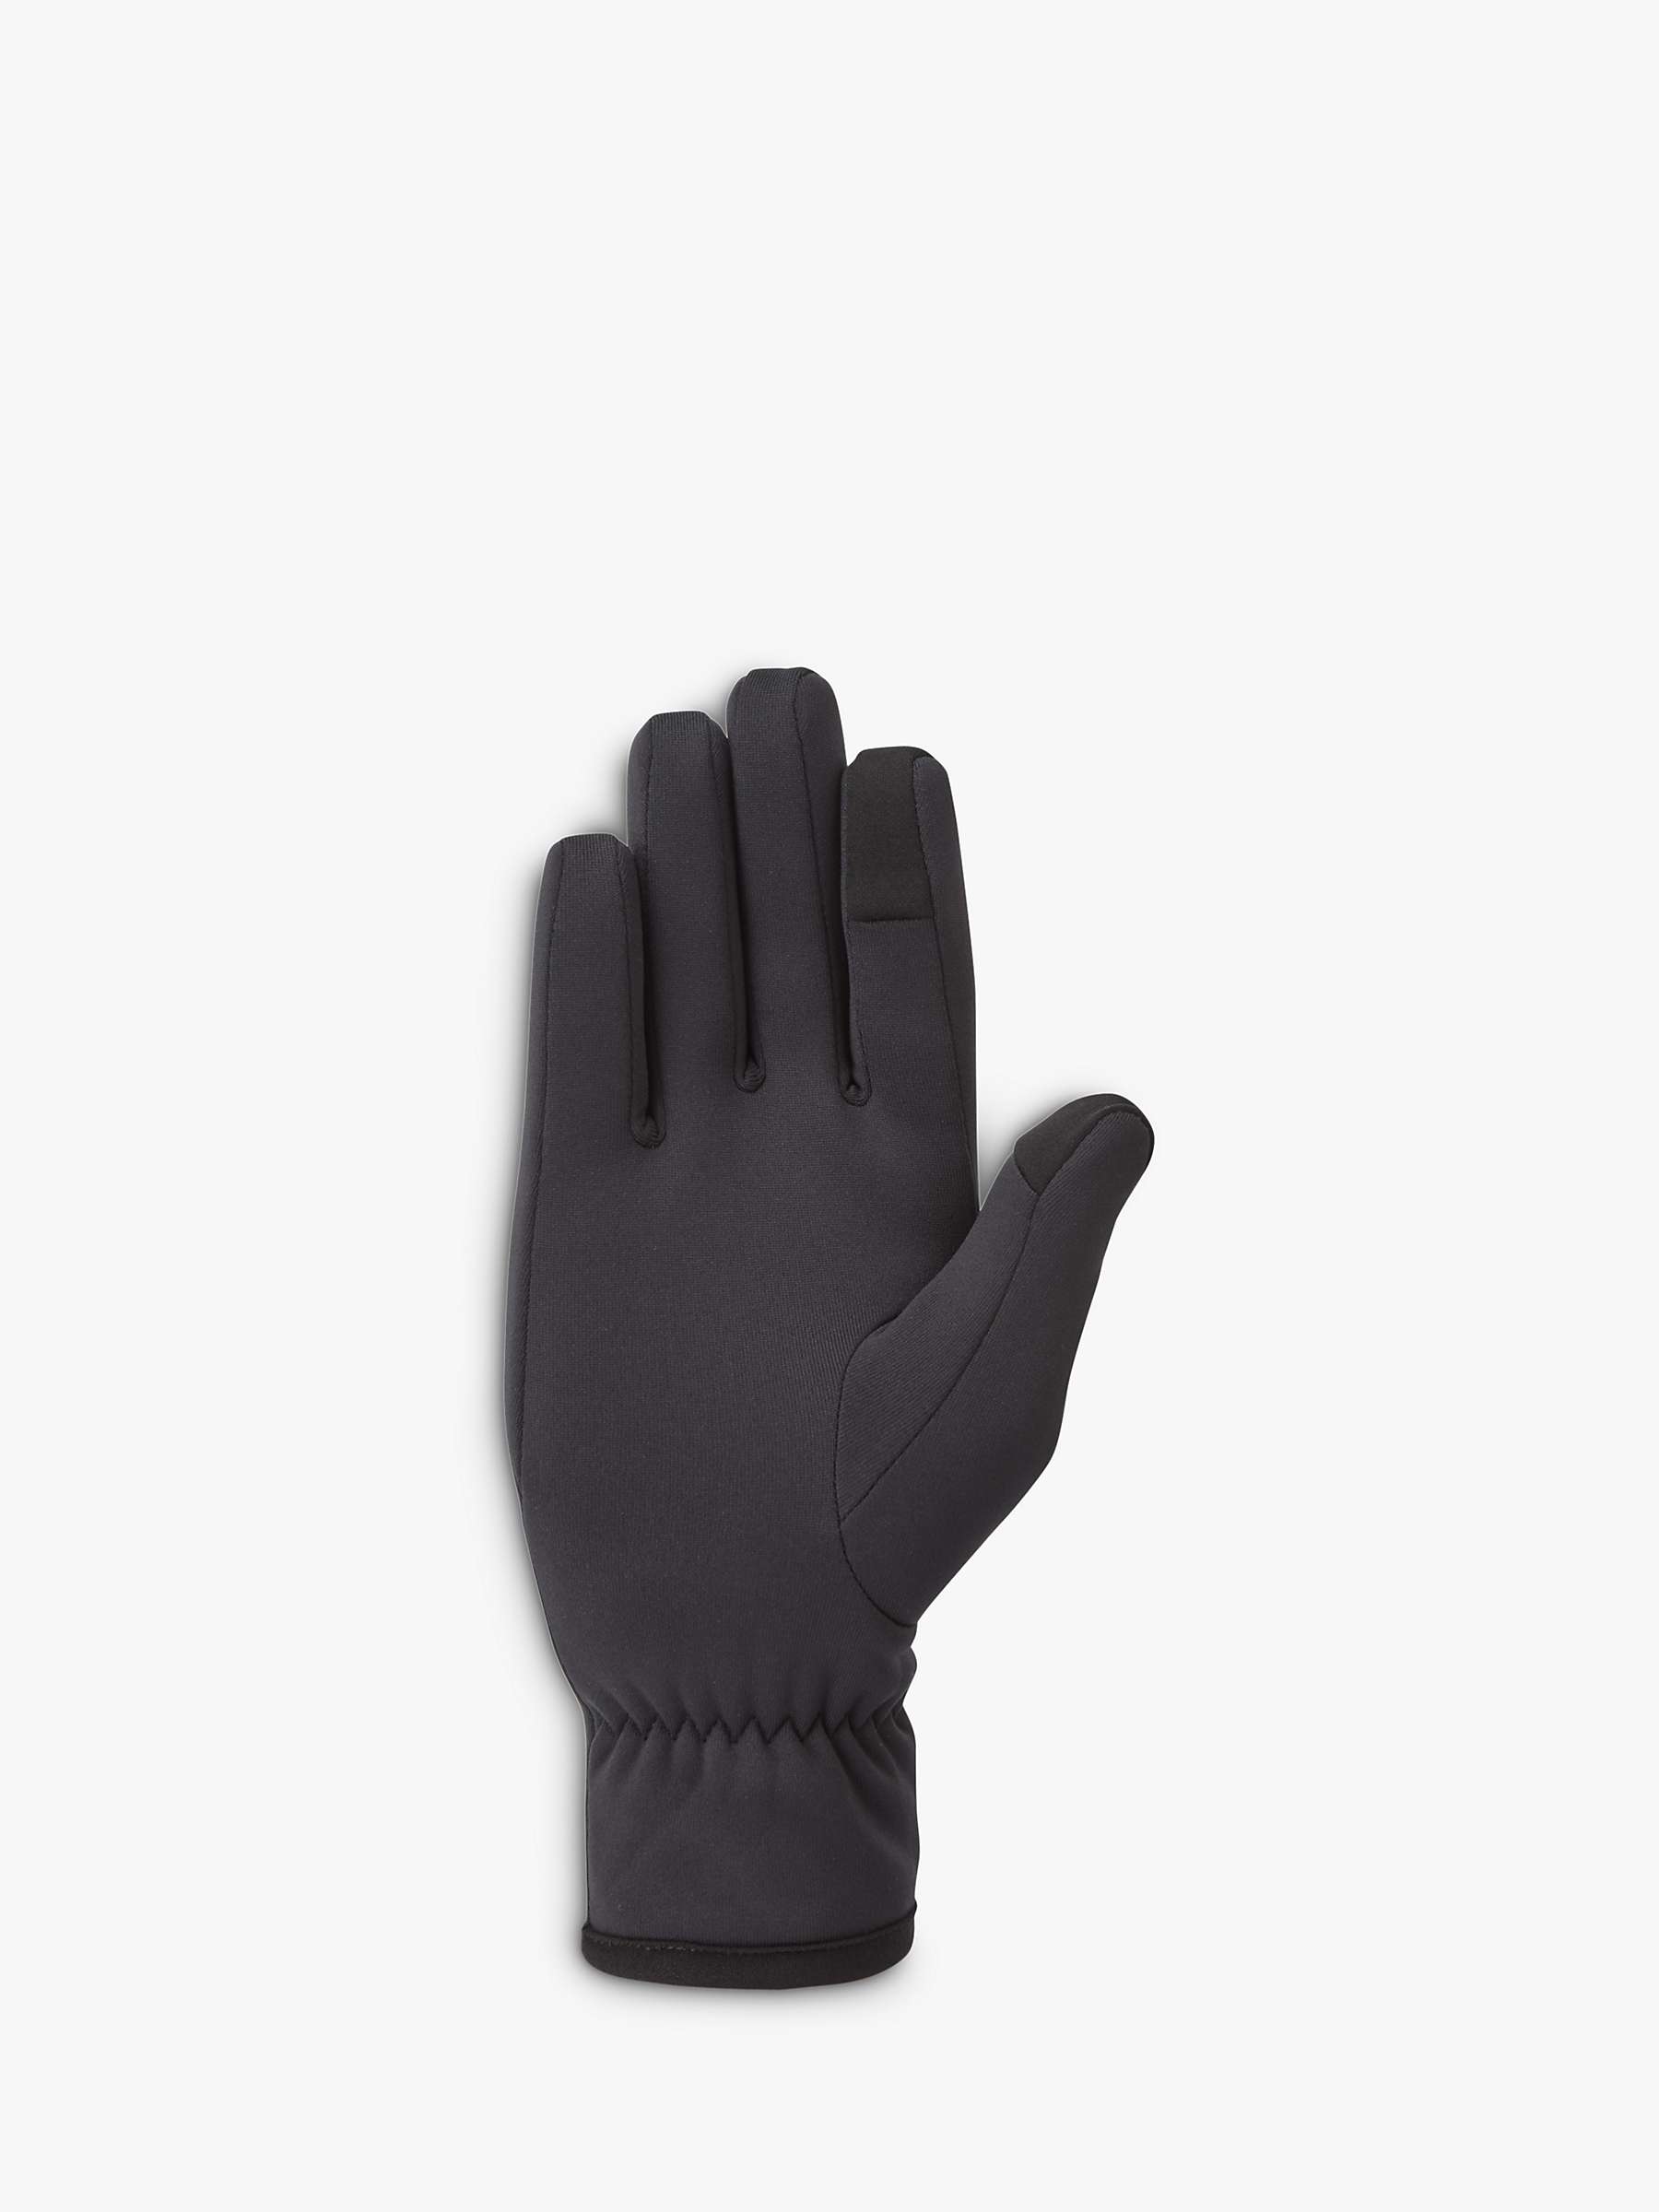 Buy Montane Men's Fury Fleece Gloves, Black Online at johnlewis.com